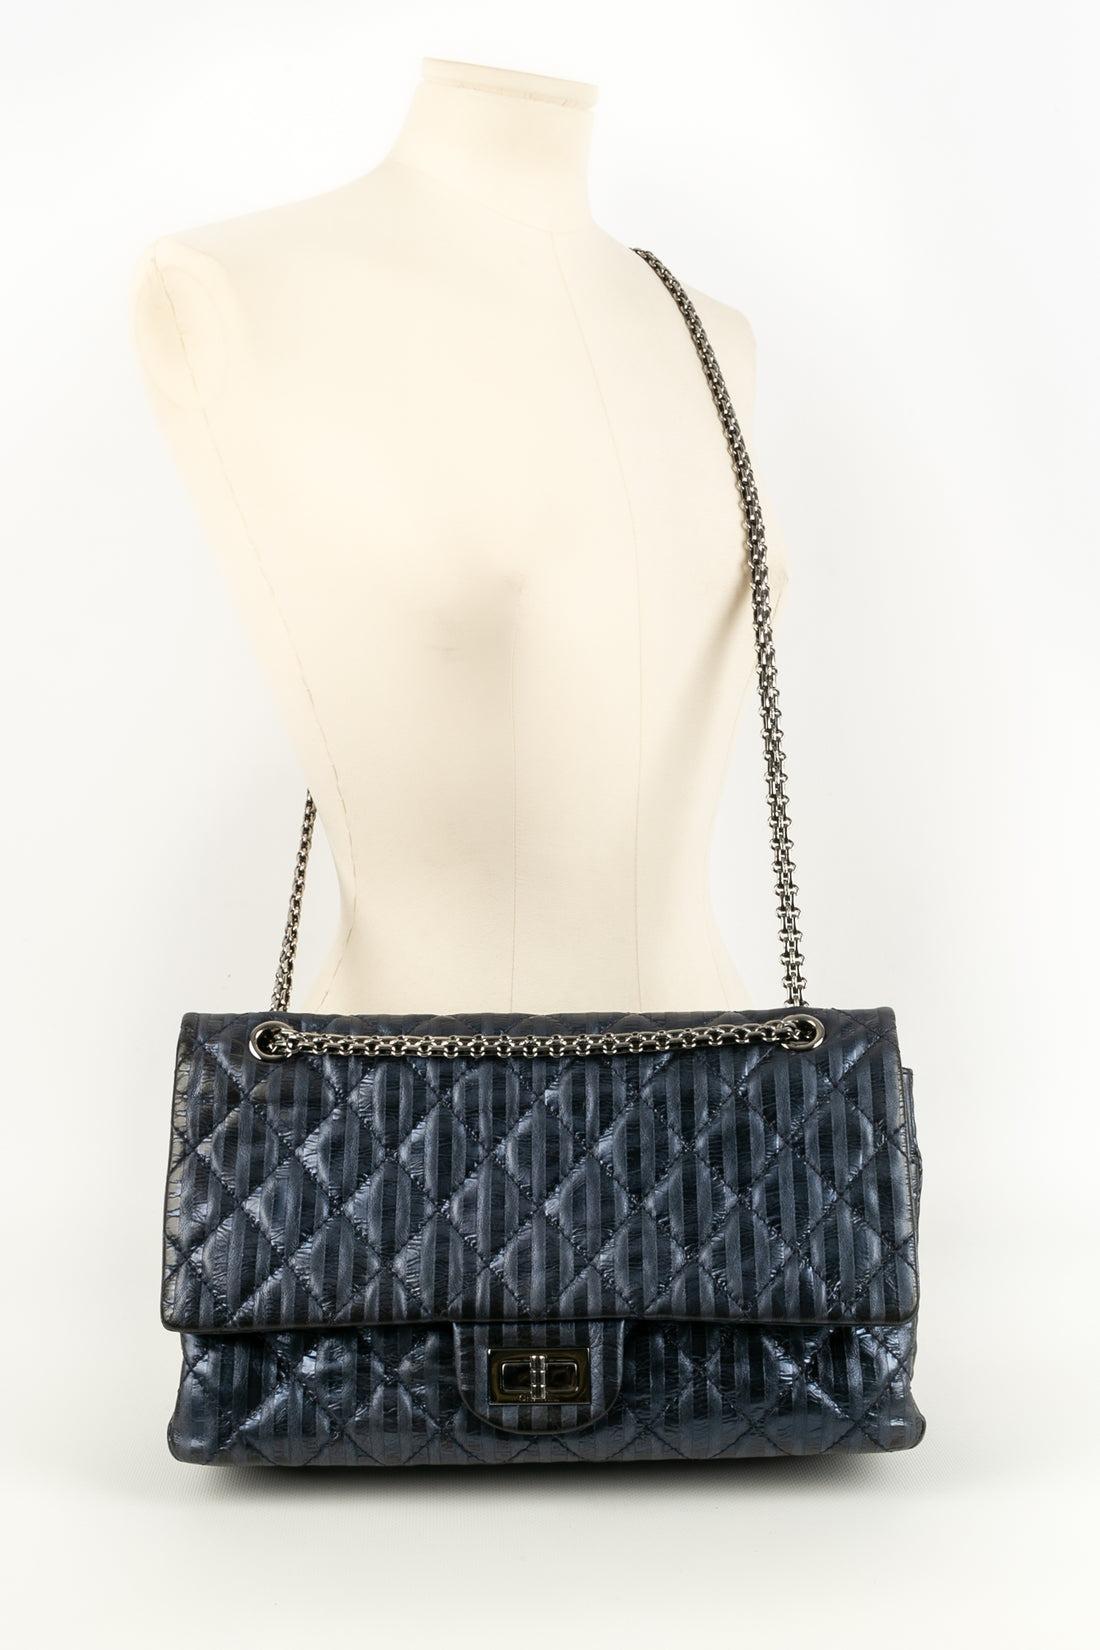 Chanel Blue Metallic Leather Bag, 2008/09 10